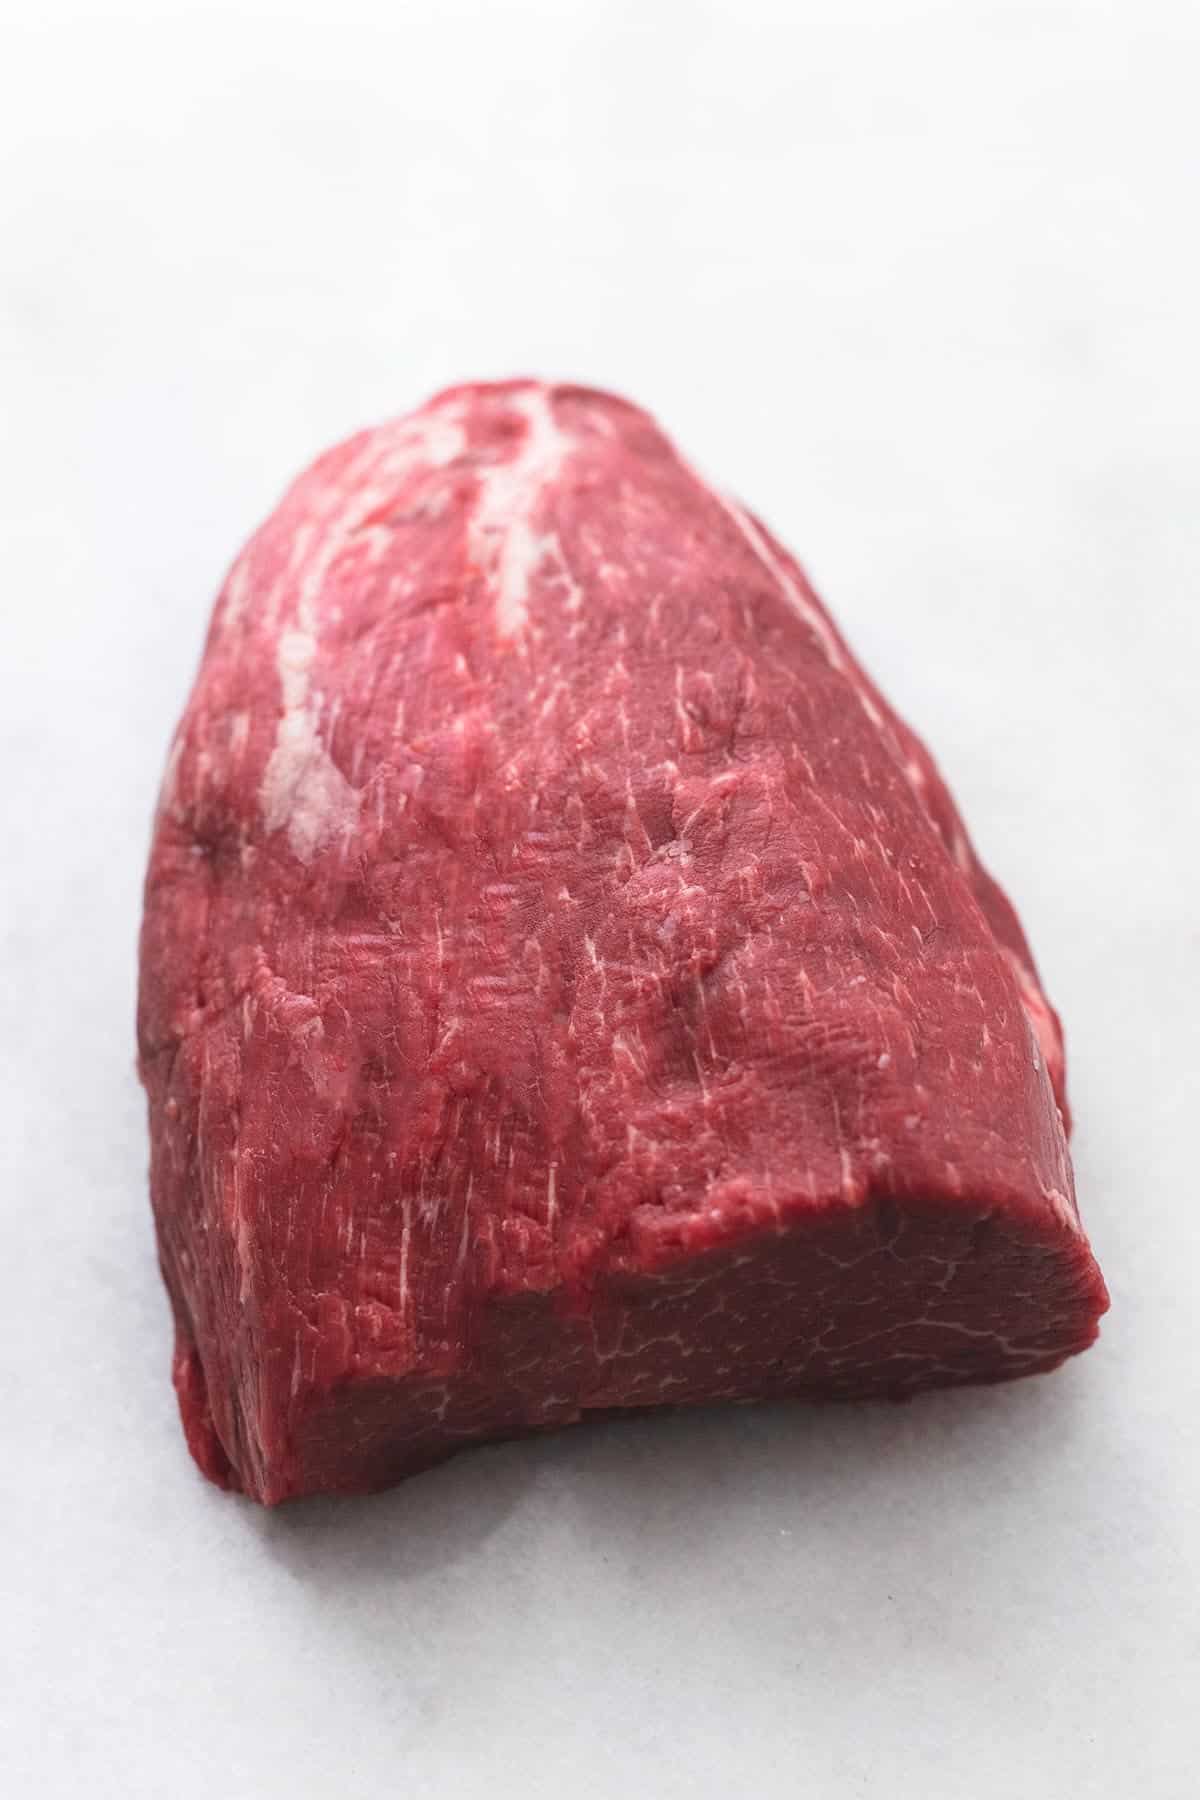 fresh beef tenderloin roast raw on marble tabletop.